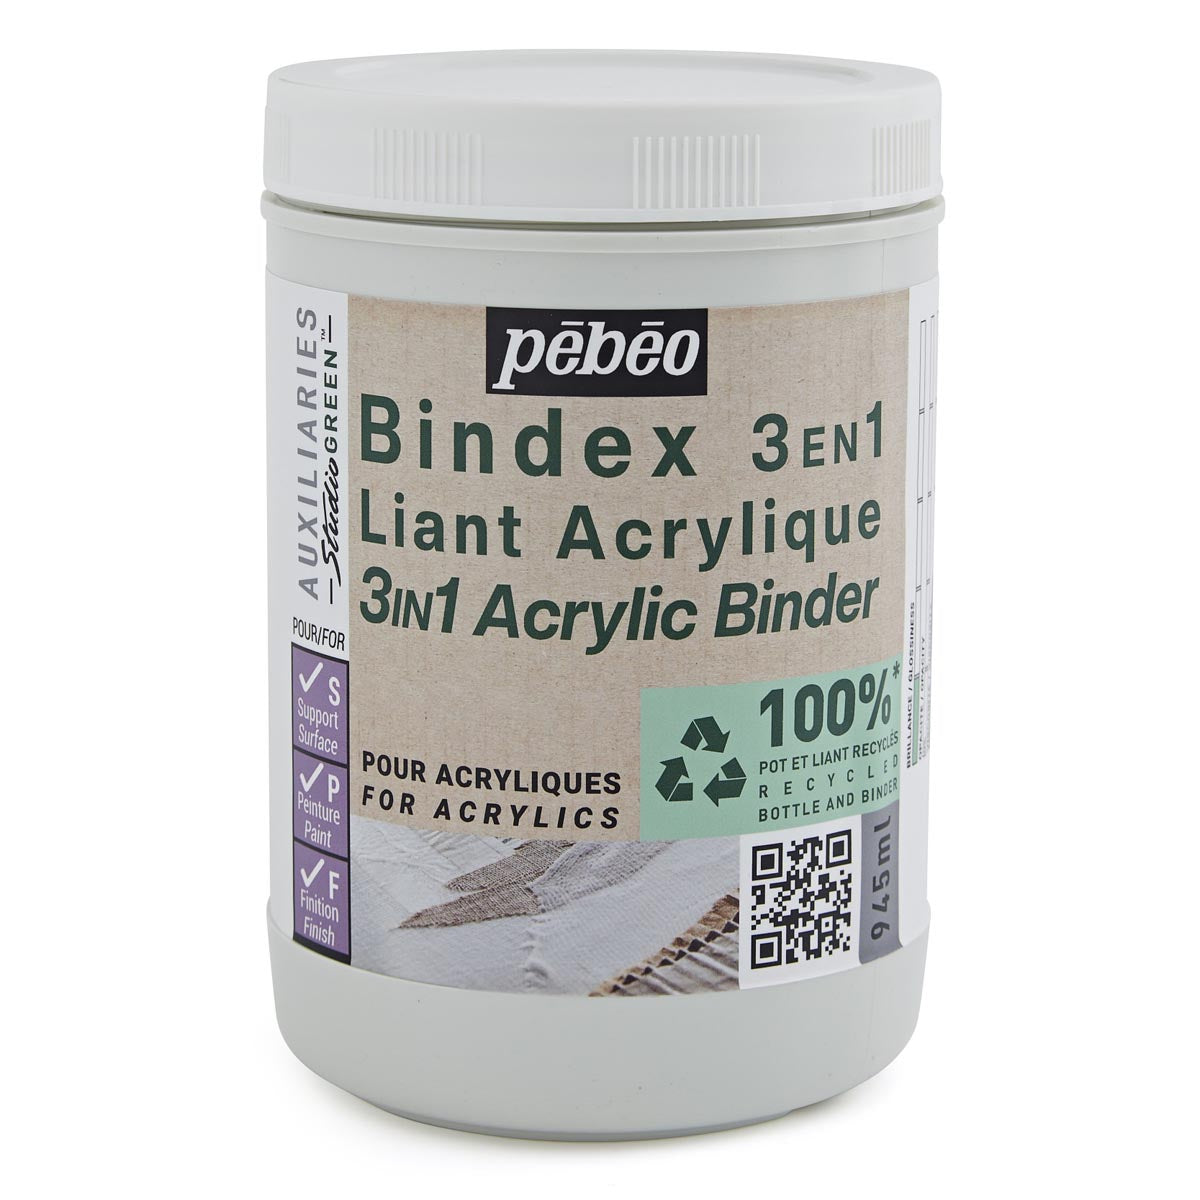 Pebeo - Bindex 3in1 Acryl Binder Studio Green - 945ml